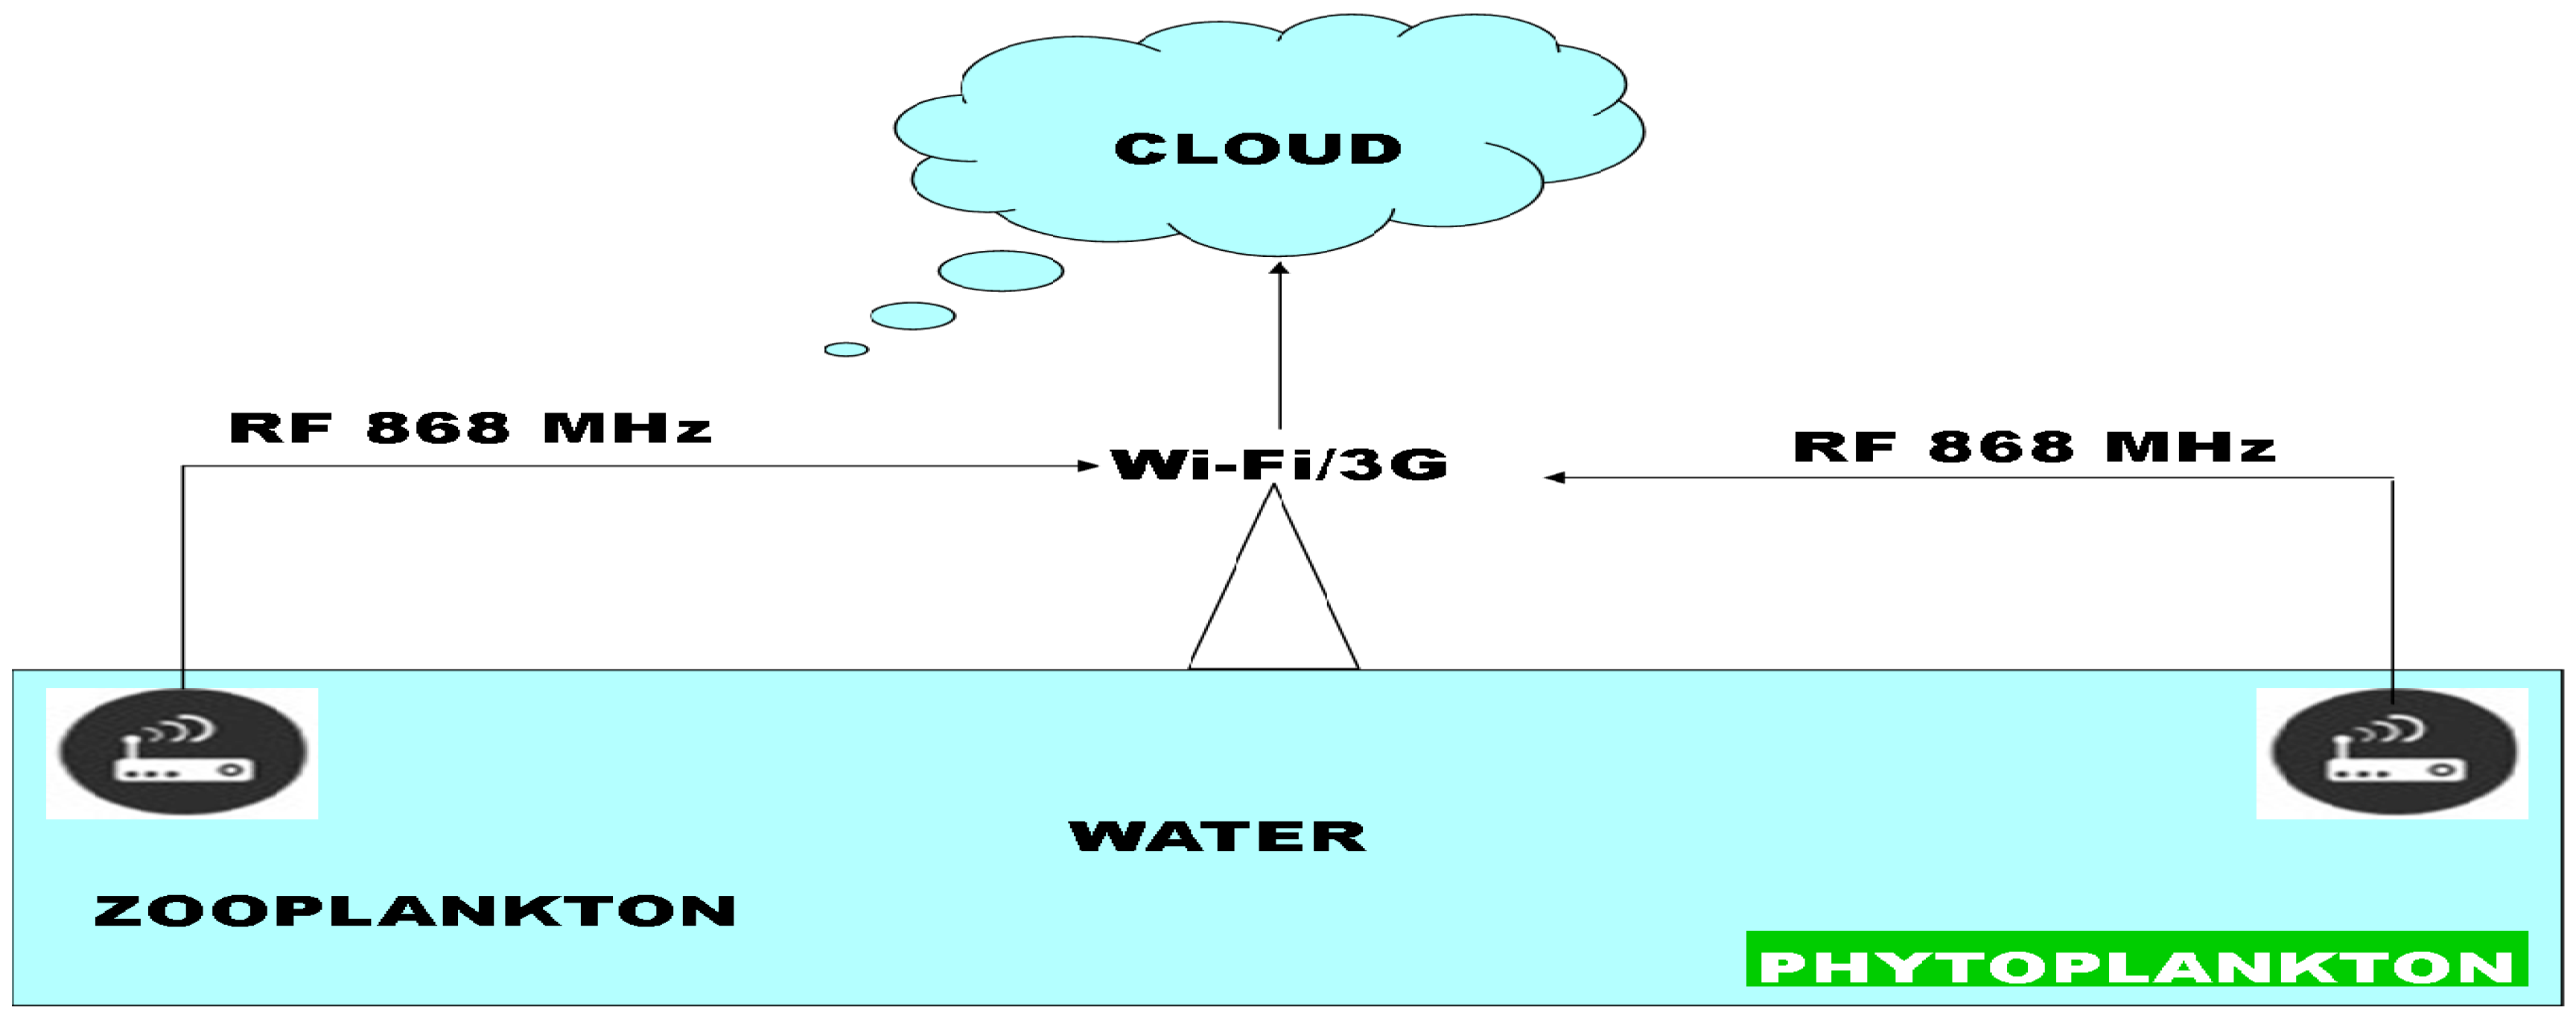 Saving water with Radio - CloudRF